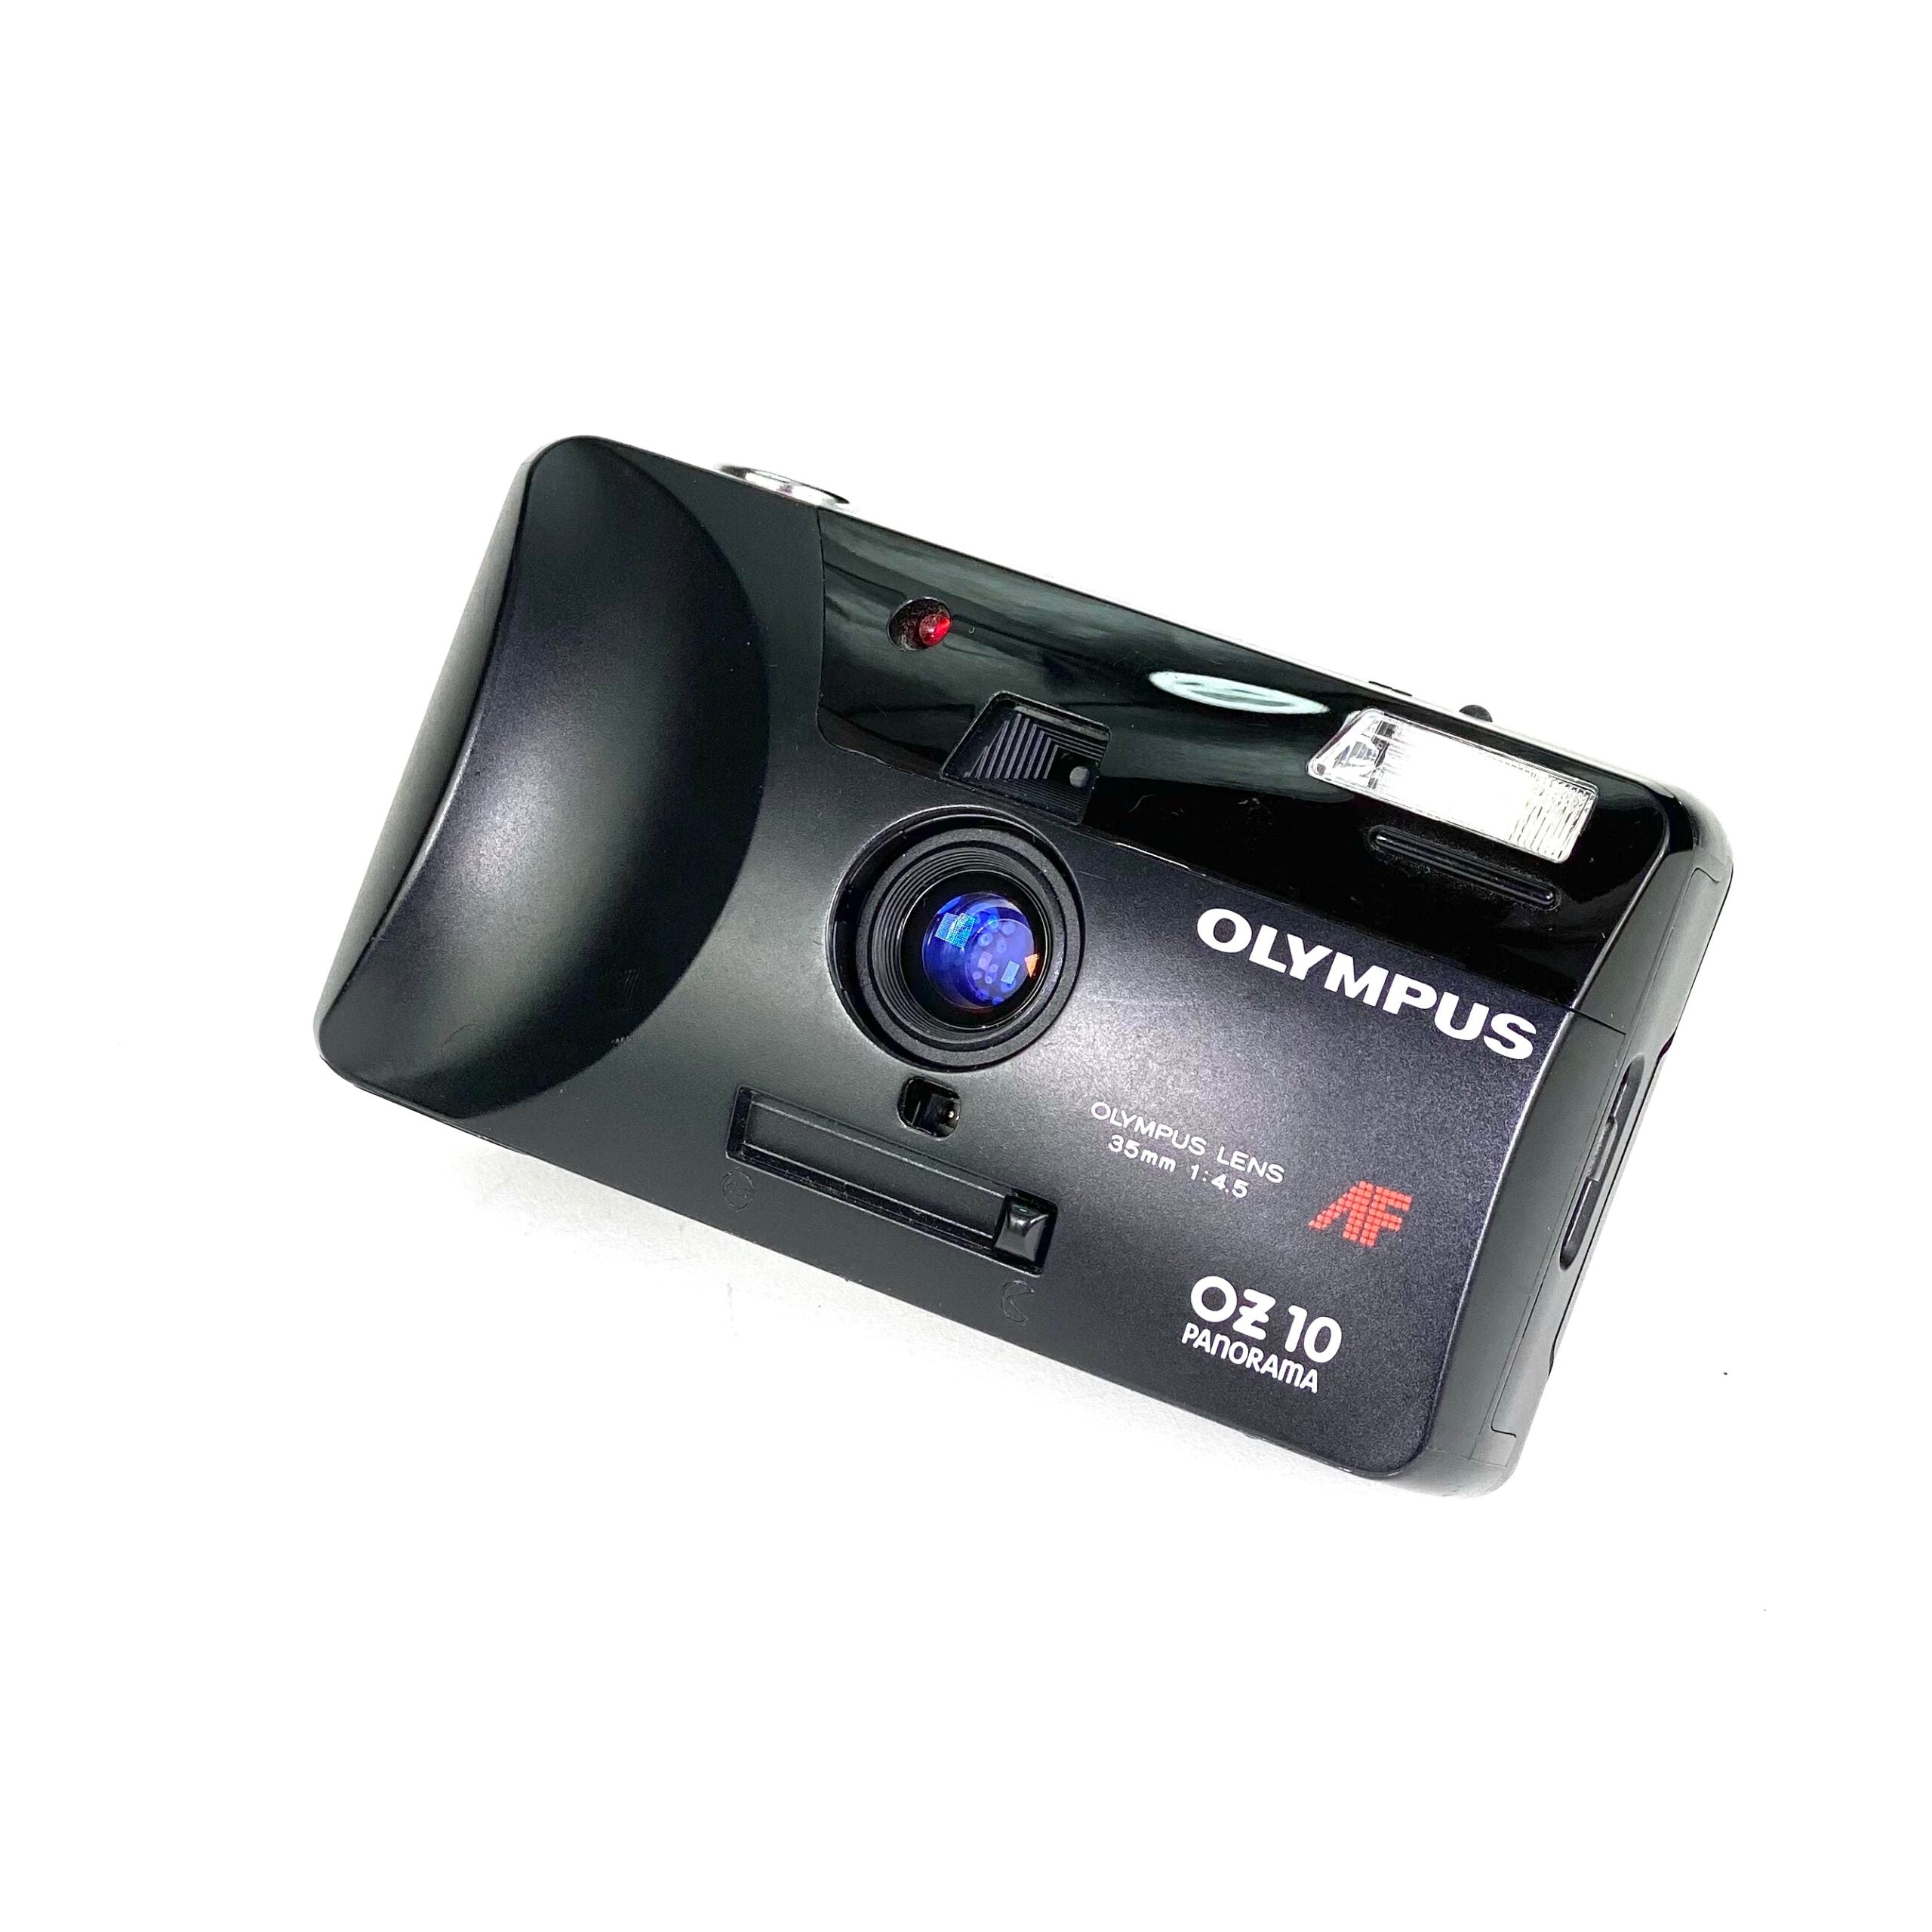 Olympus OZ 10 Panorama – Retro Camera Shop